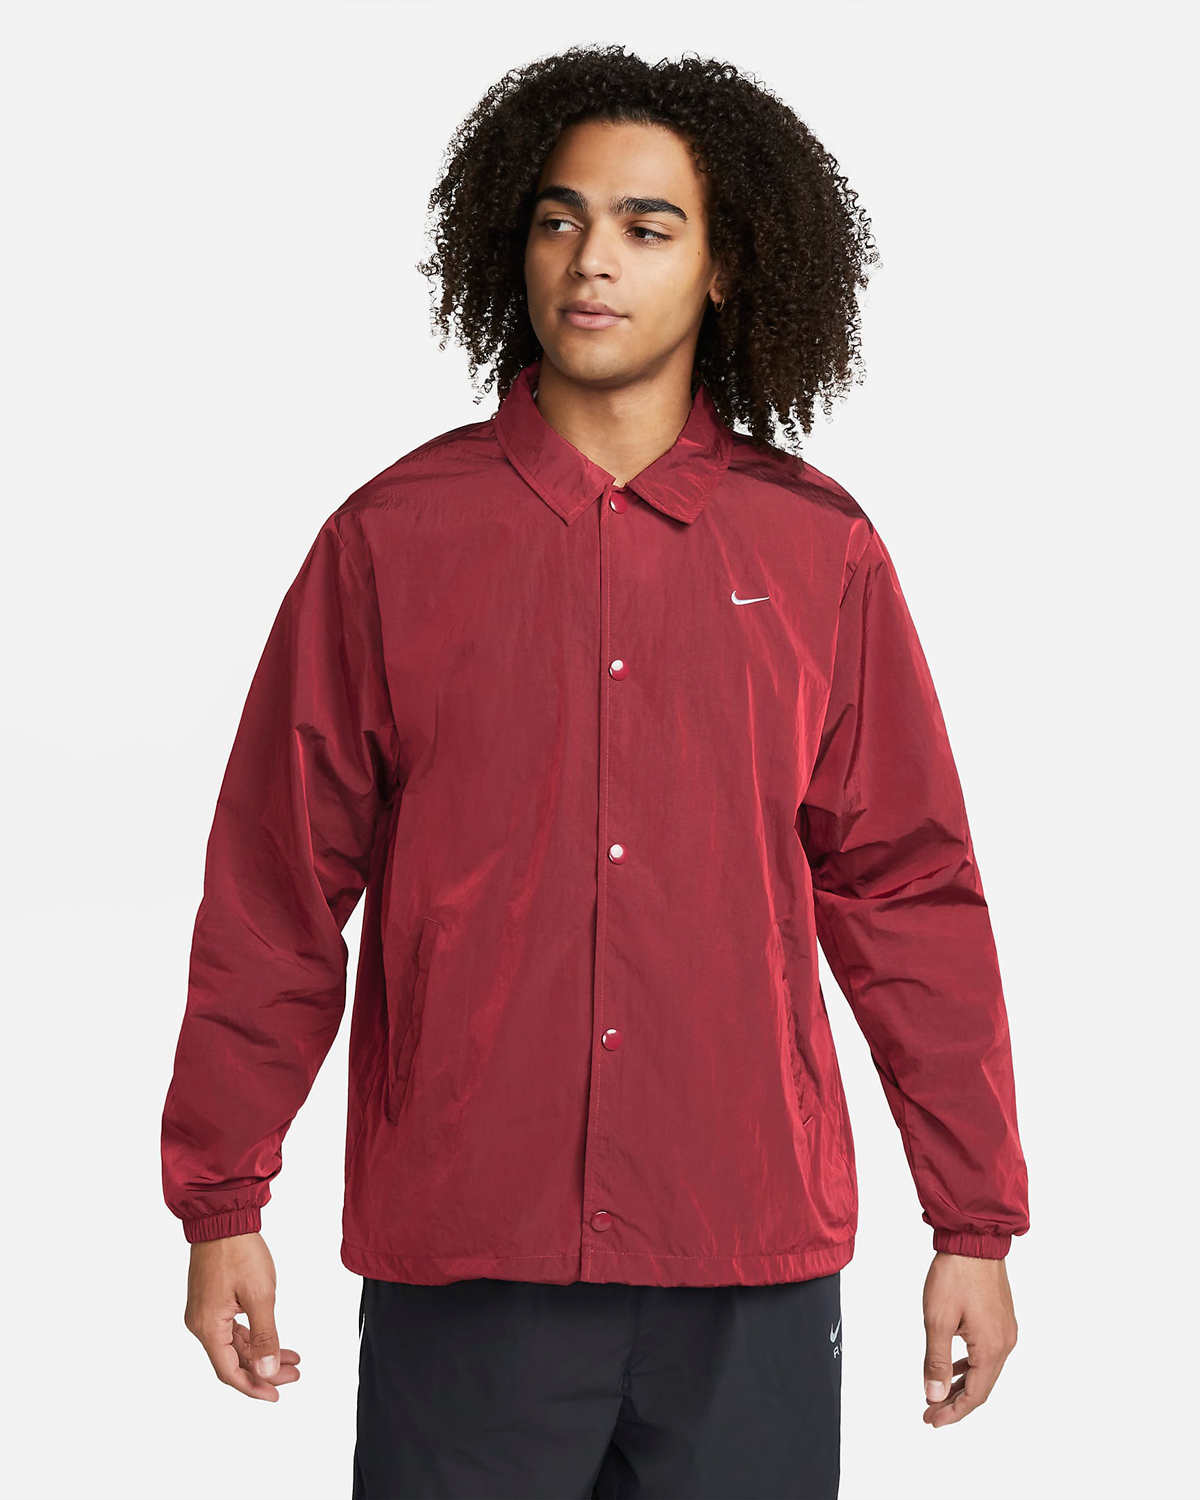 Nike-Sportswear-Coaches-Jacket-Team-Red